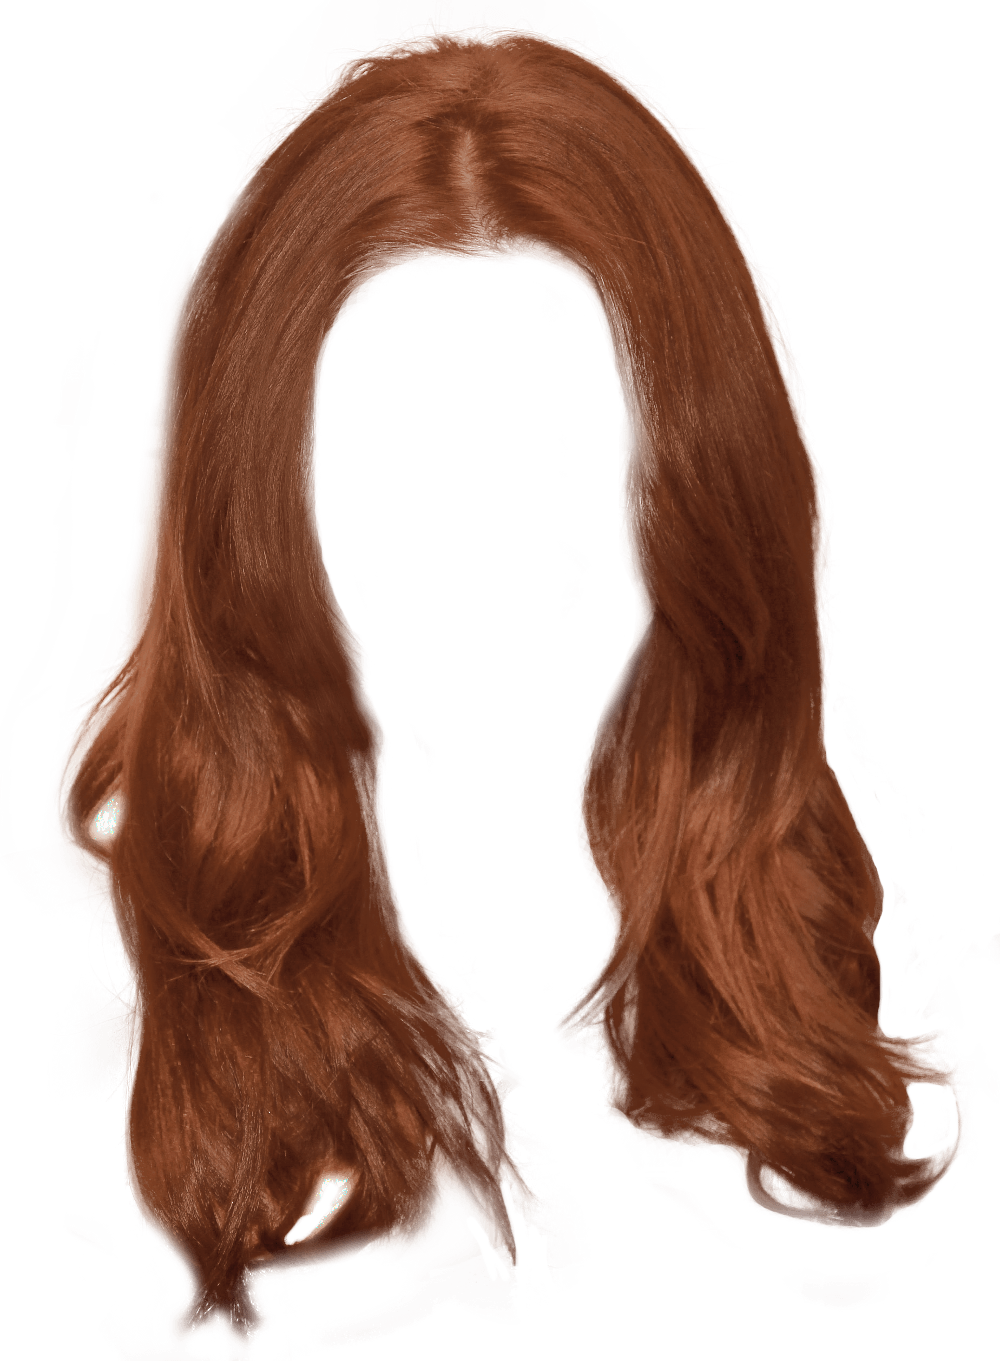 Imagen de PNG de pelo rizado marrón